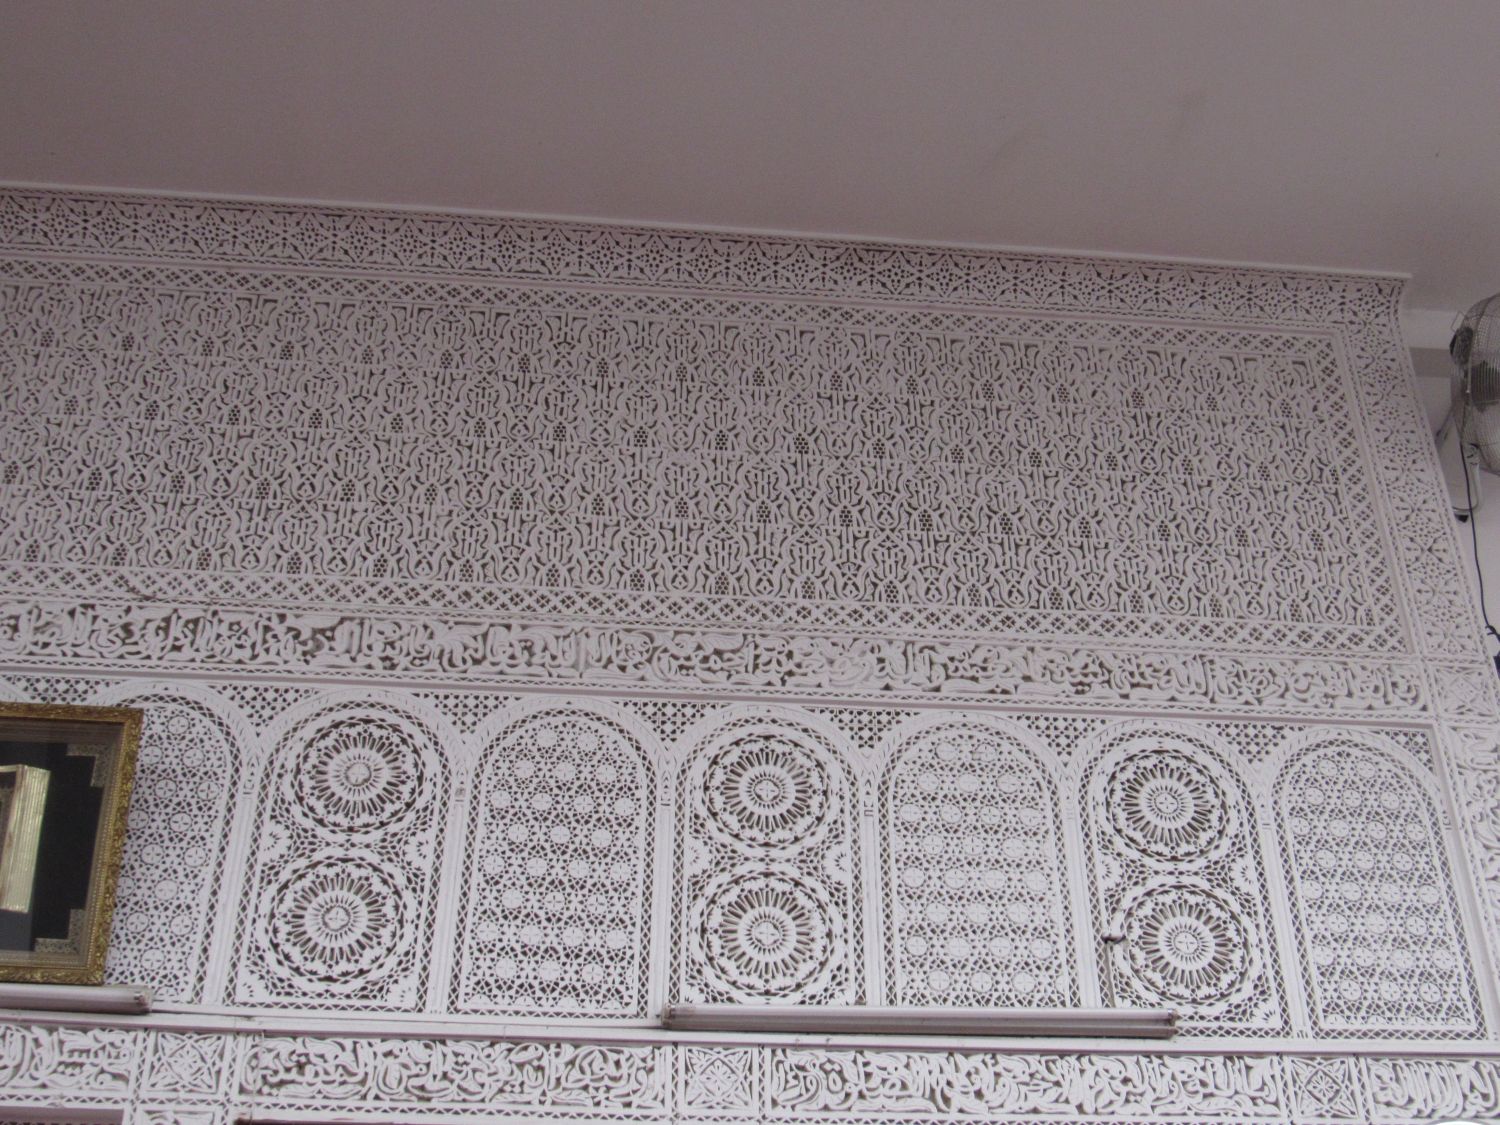 Mosquée El Mellah - Interior view, carvings in the prayer hall wall.